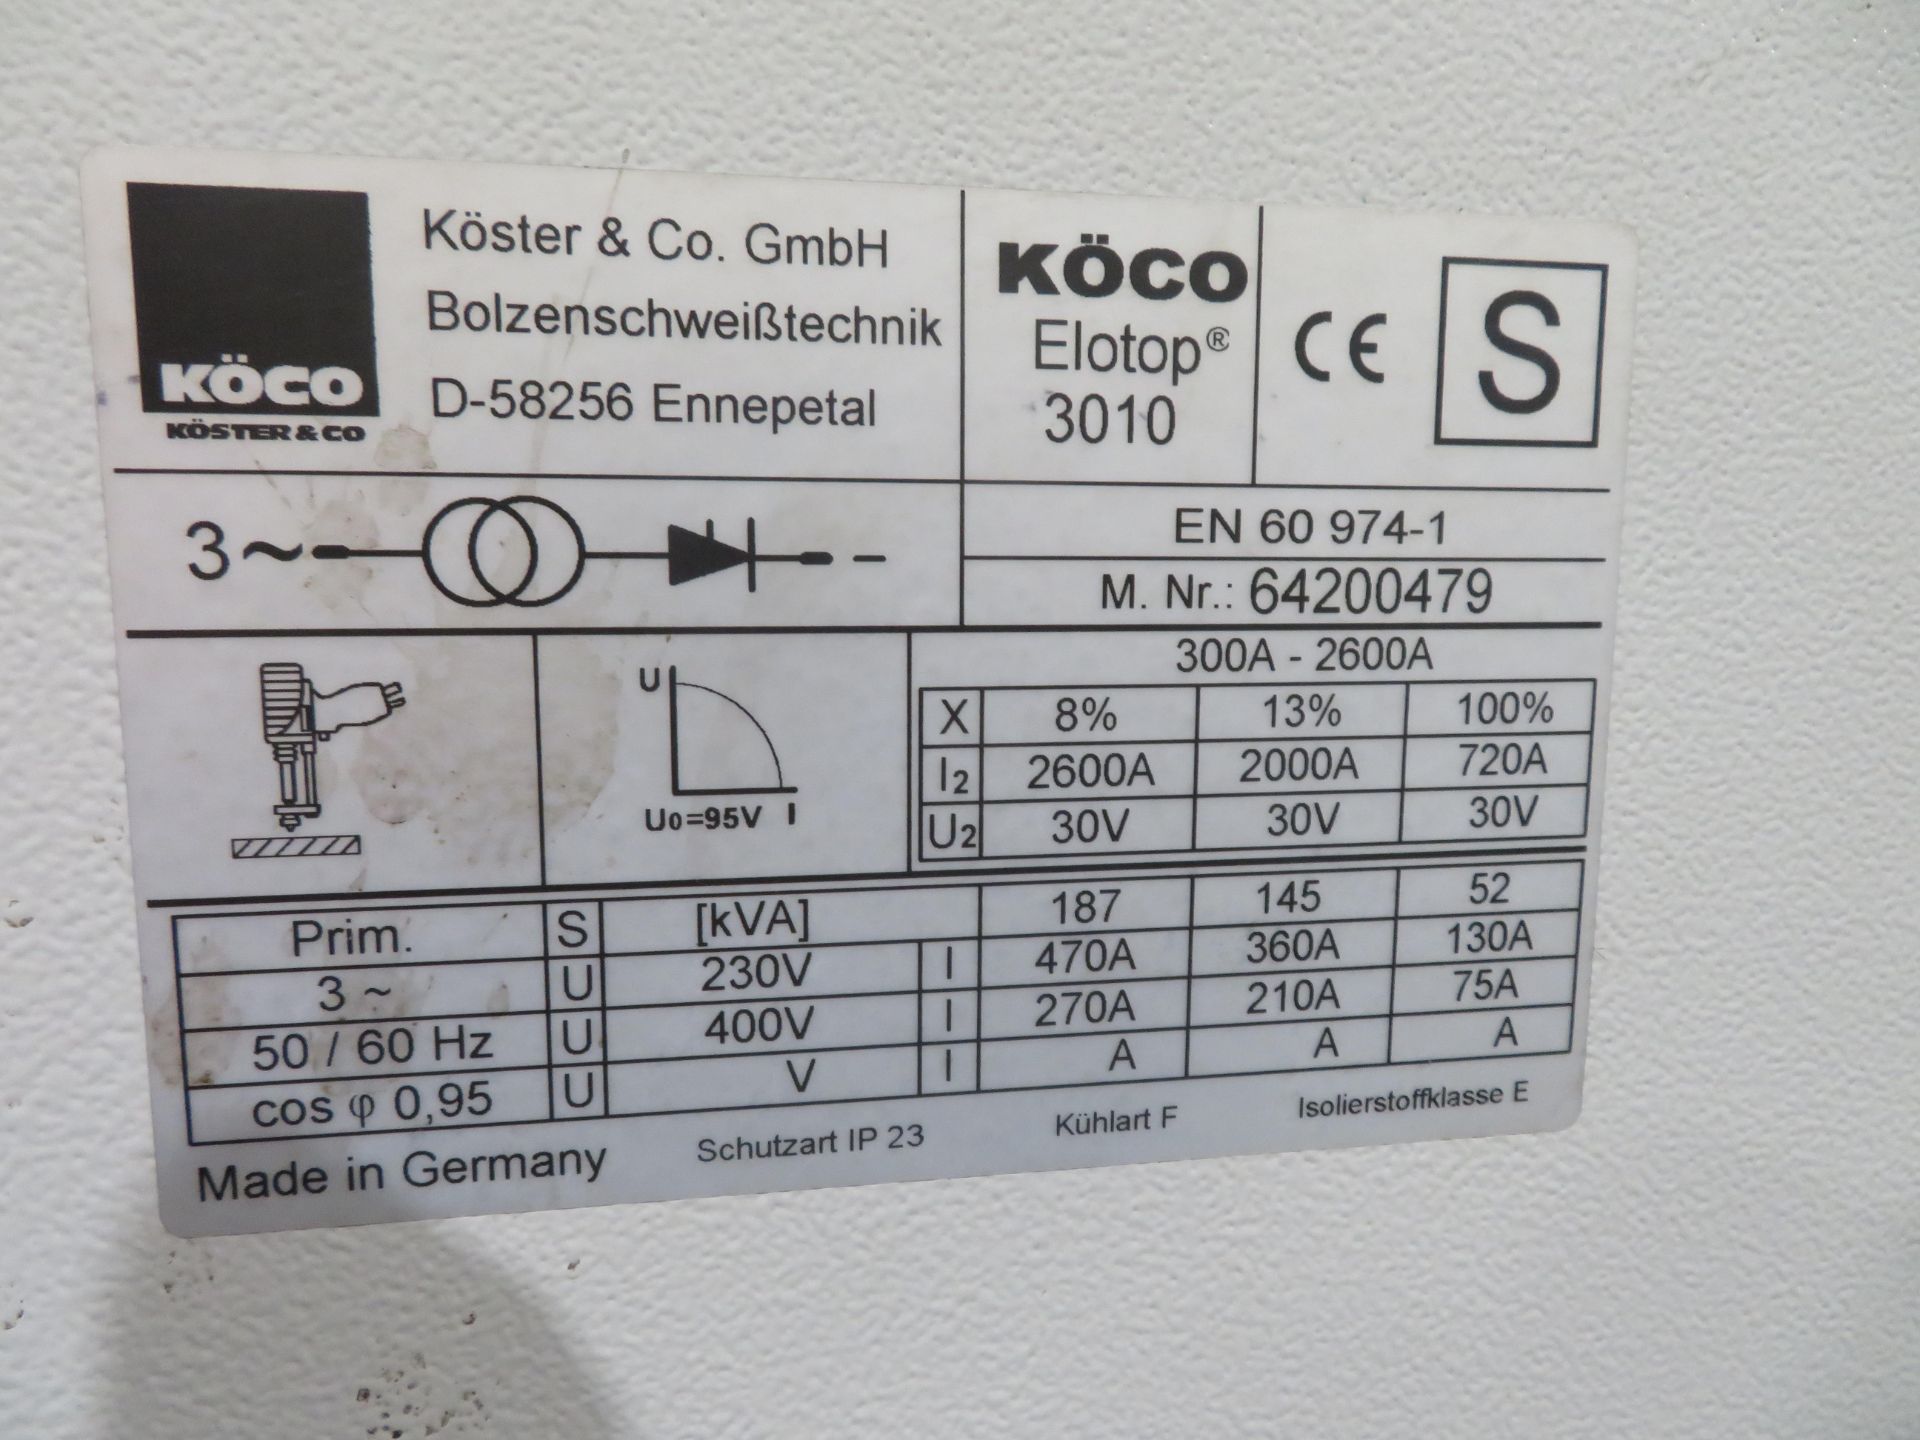 Koco Elotop 3010 stud welder s/n 64200479 with calibration certificate dated 30.06.2020 - Image 6 of 6